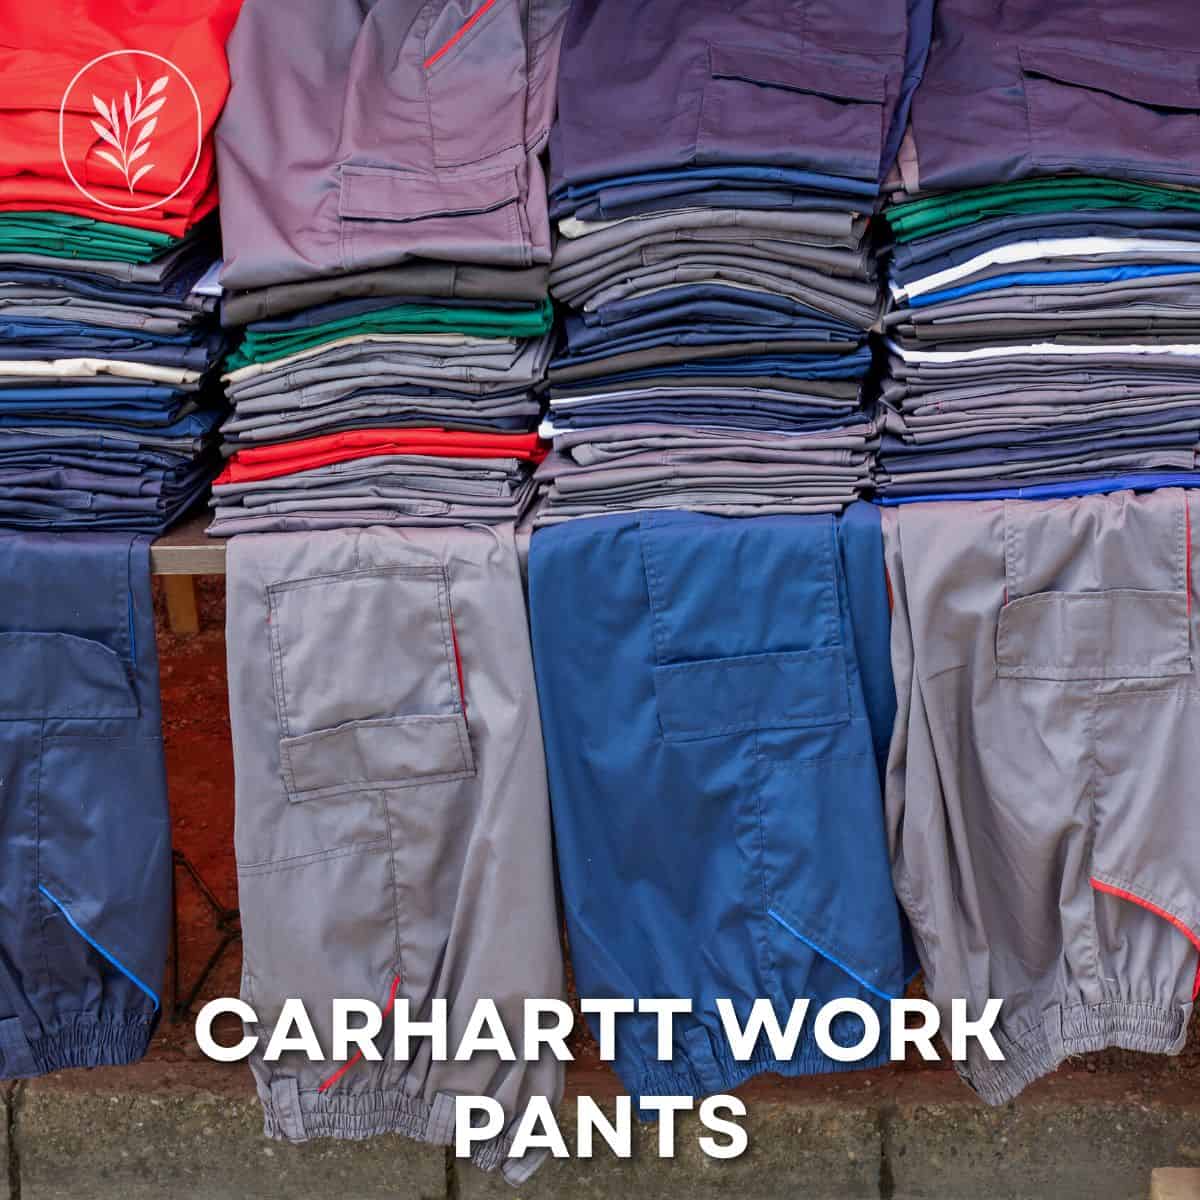 Carhartt work pants via @home4theharvest